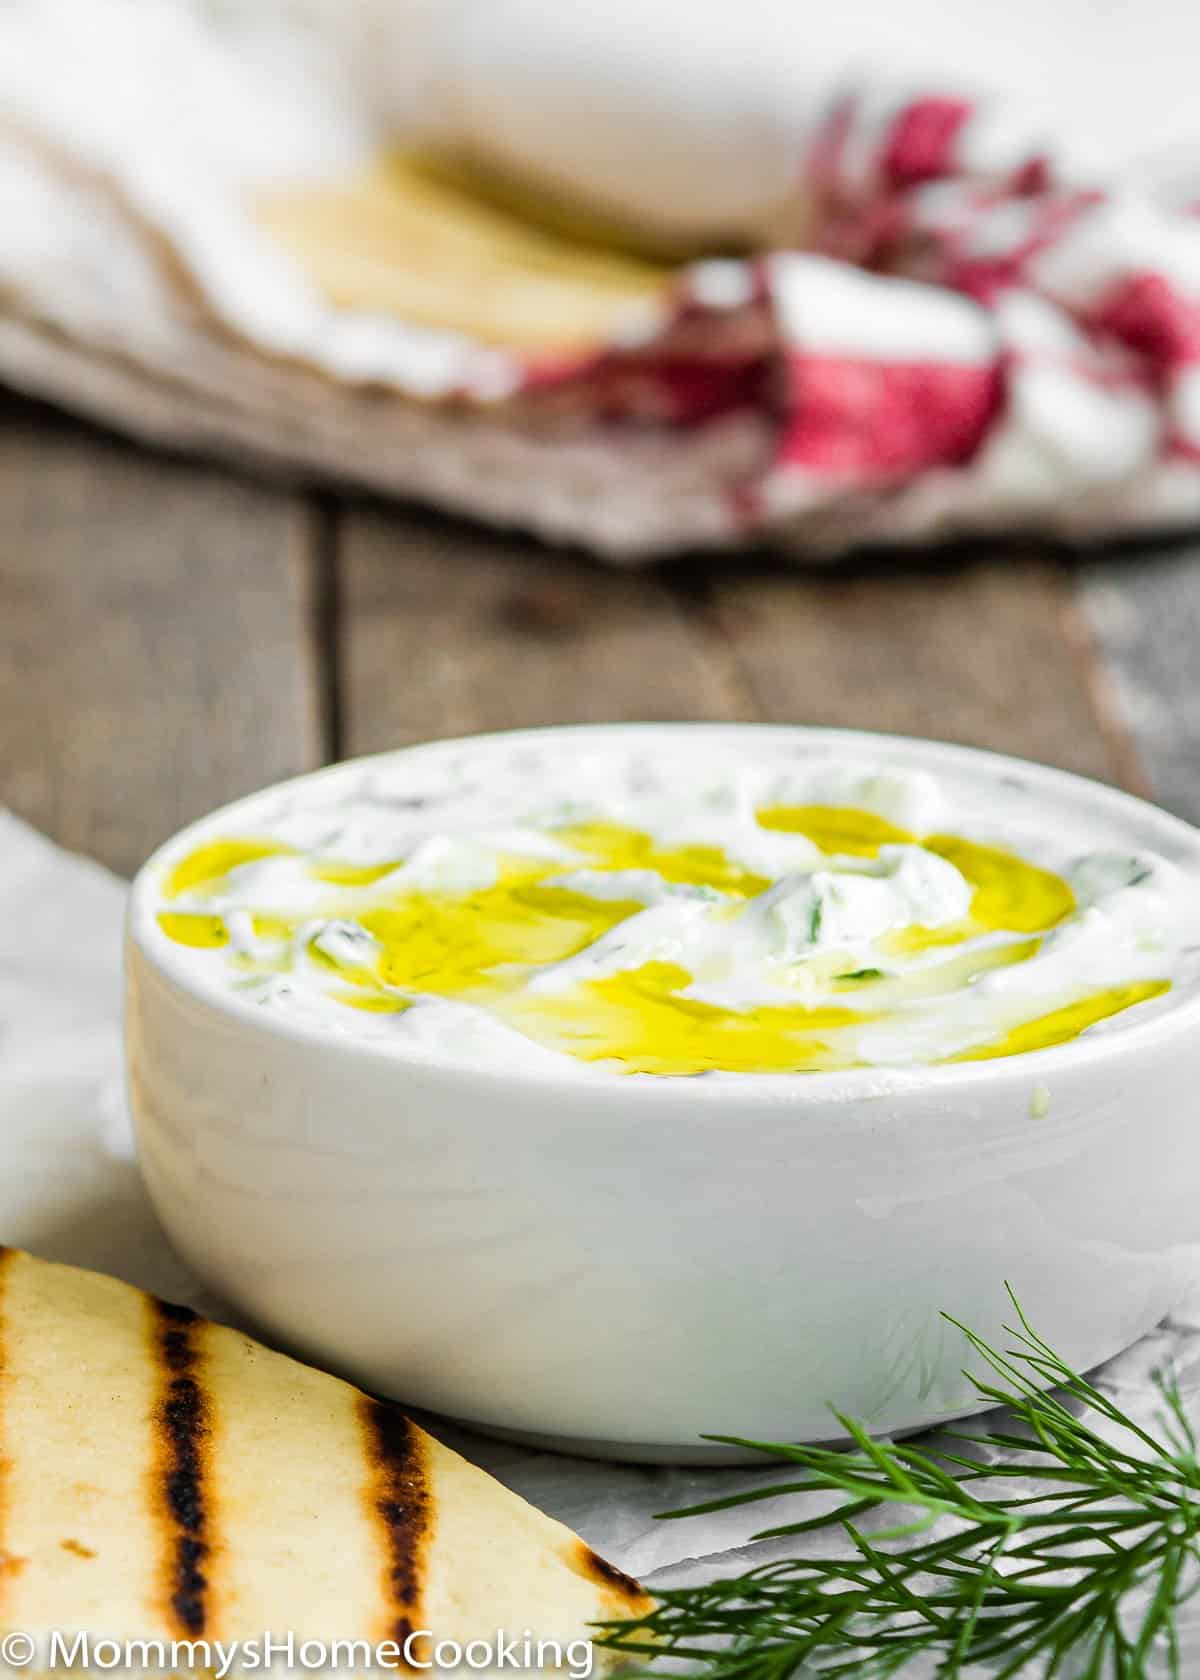 Tzatziki Sauce [Greek Yogurt Sauce] in bowl drizzled with olive oil